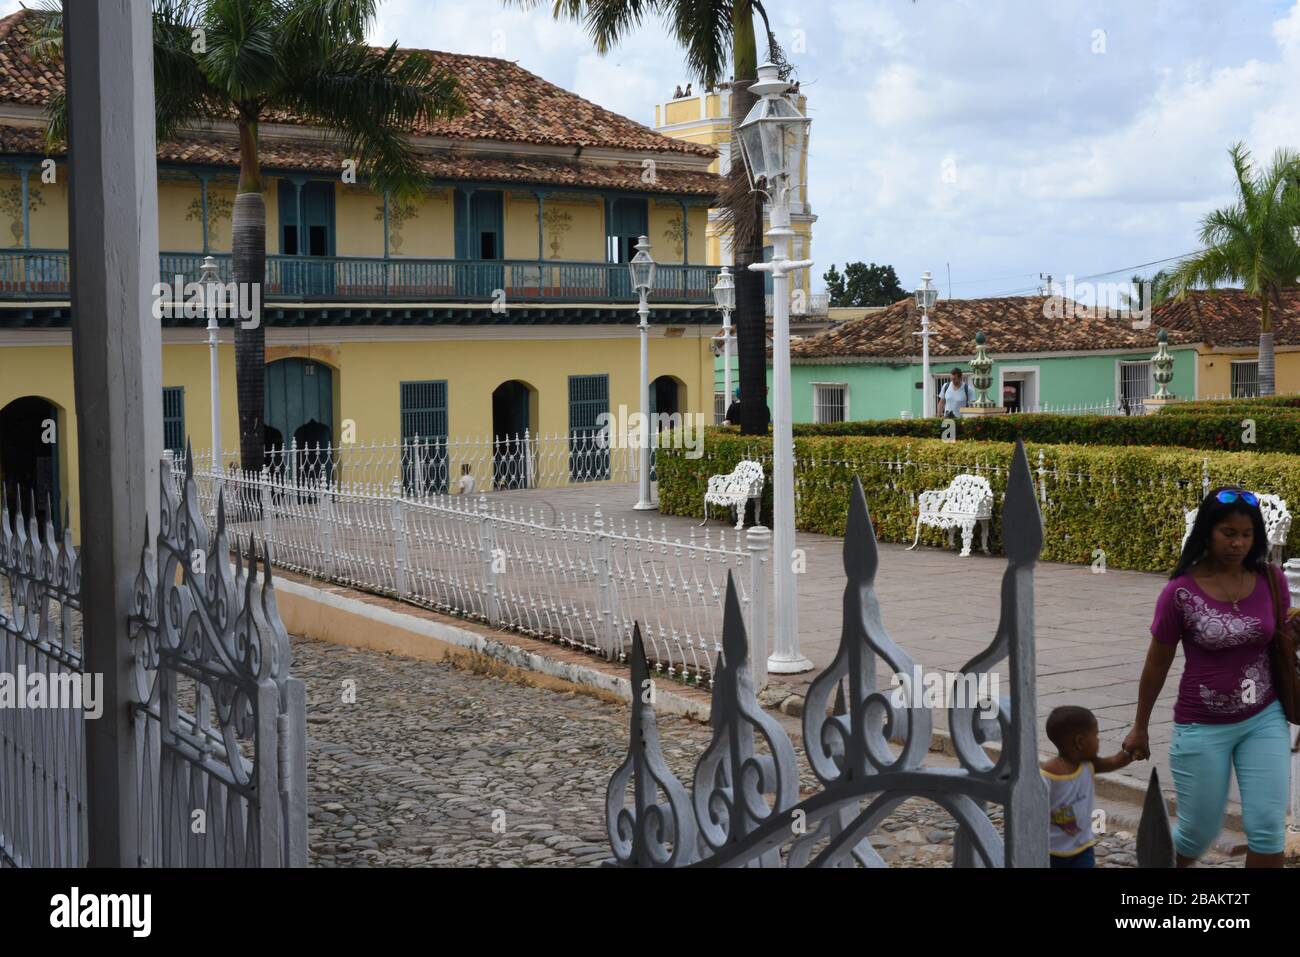 Personas, plaza, edificio, fachada, 2014, Cuba Foto de stock